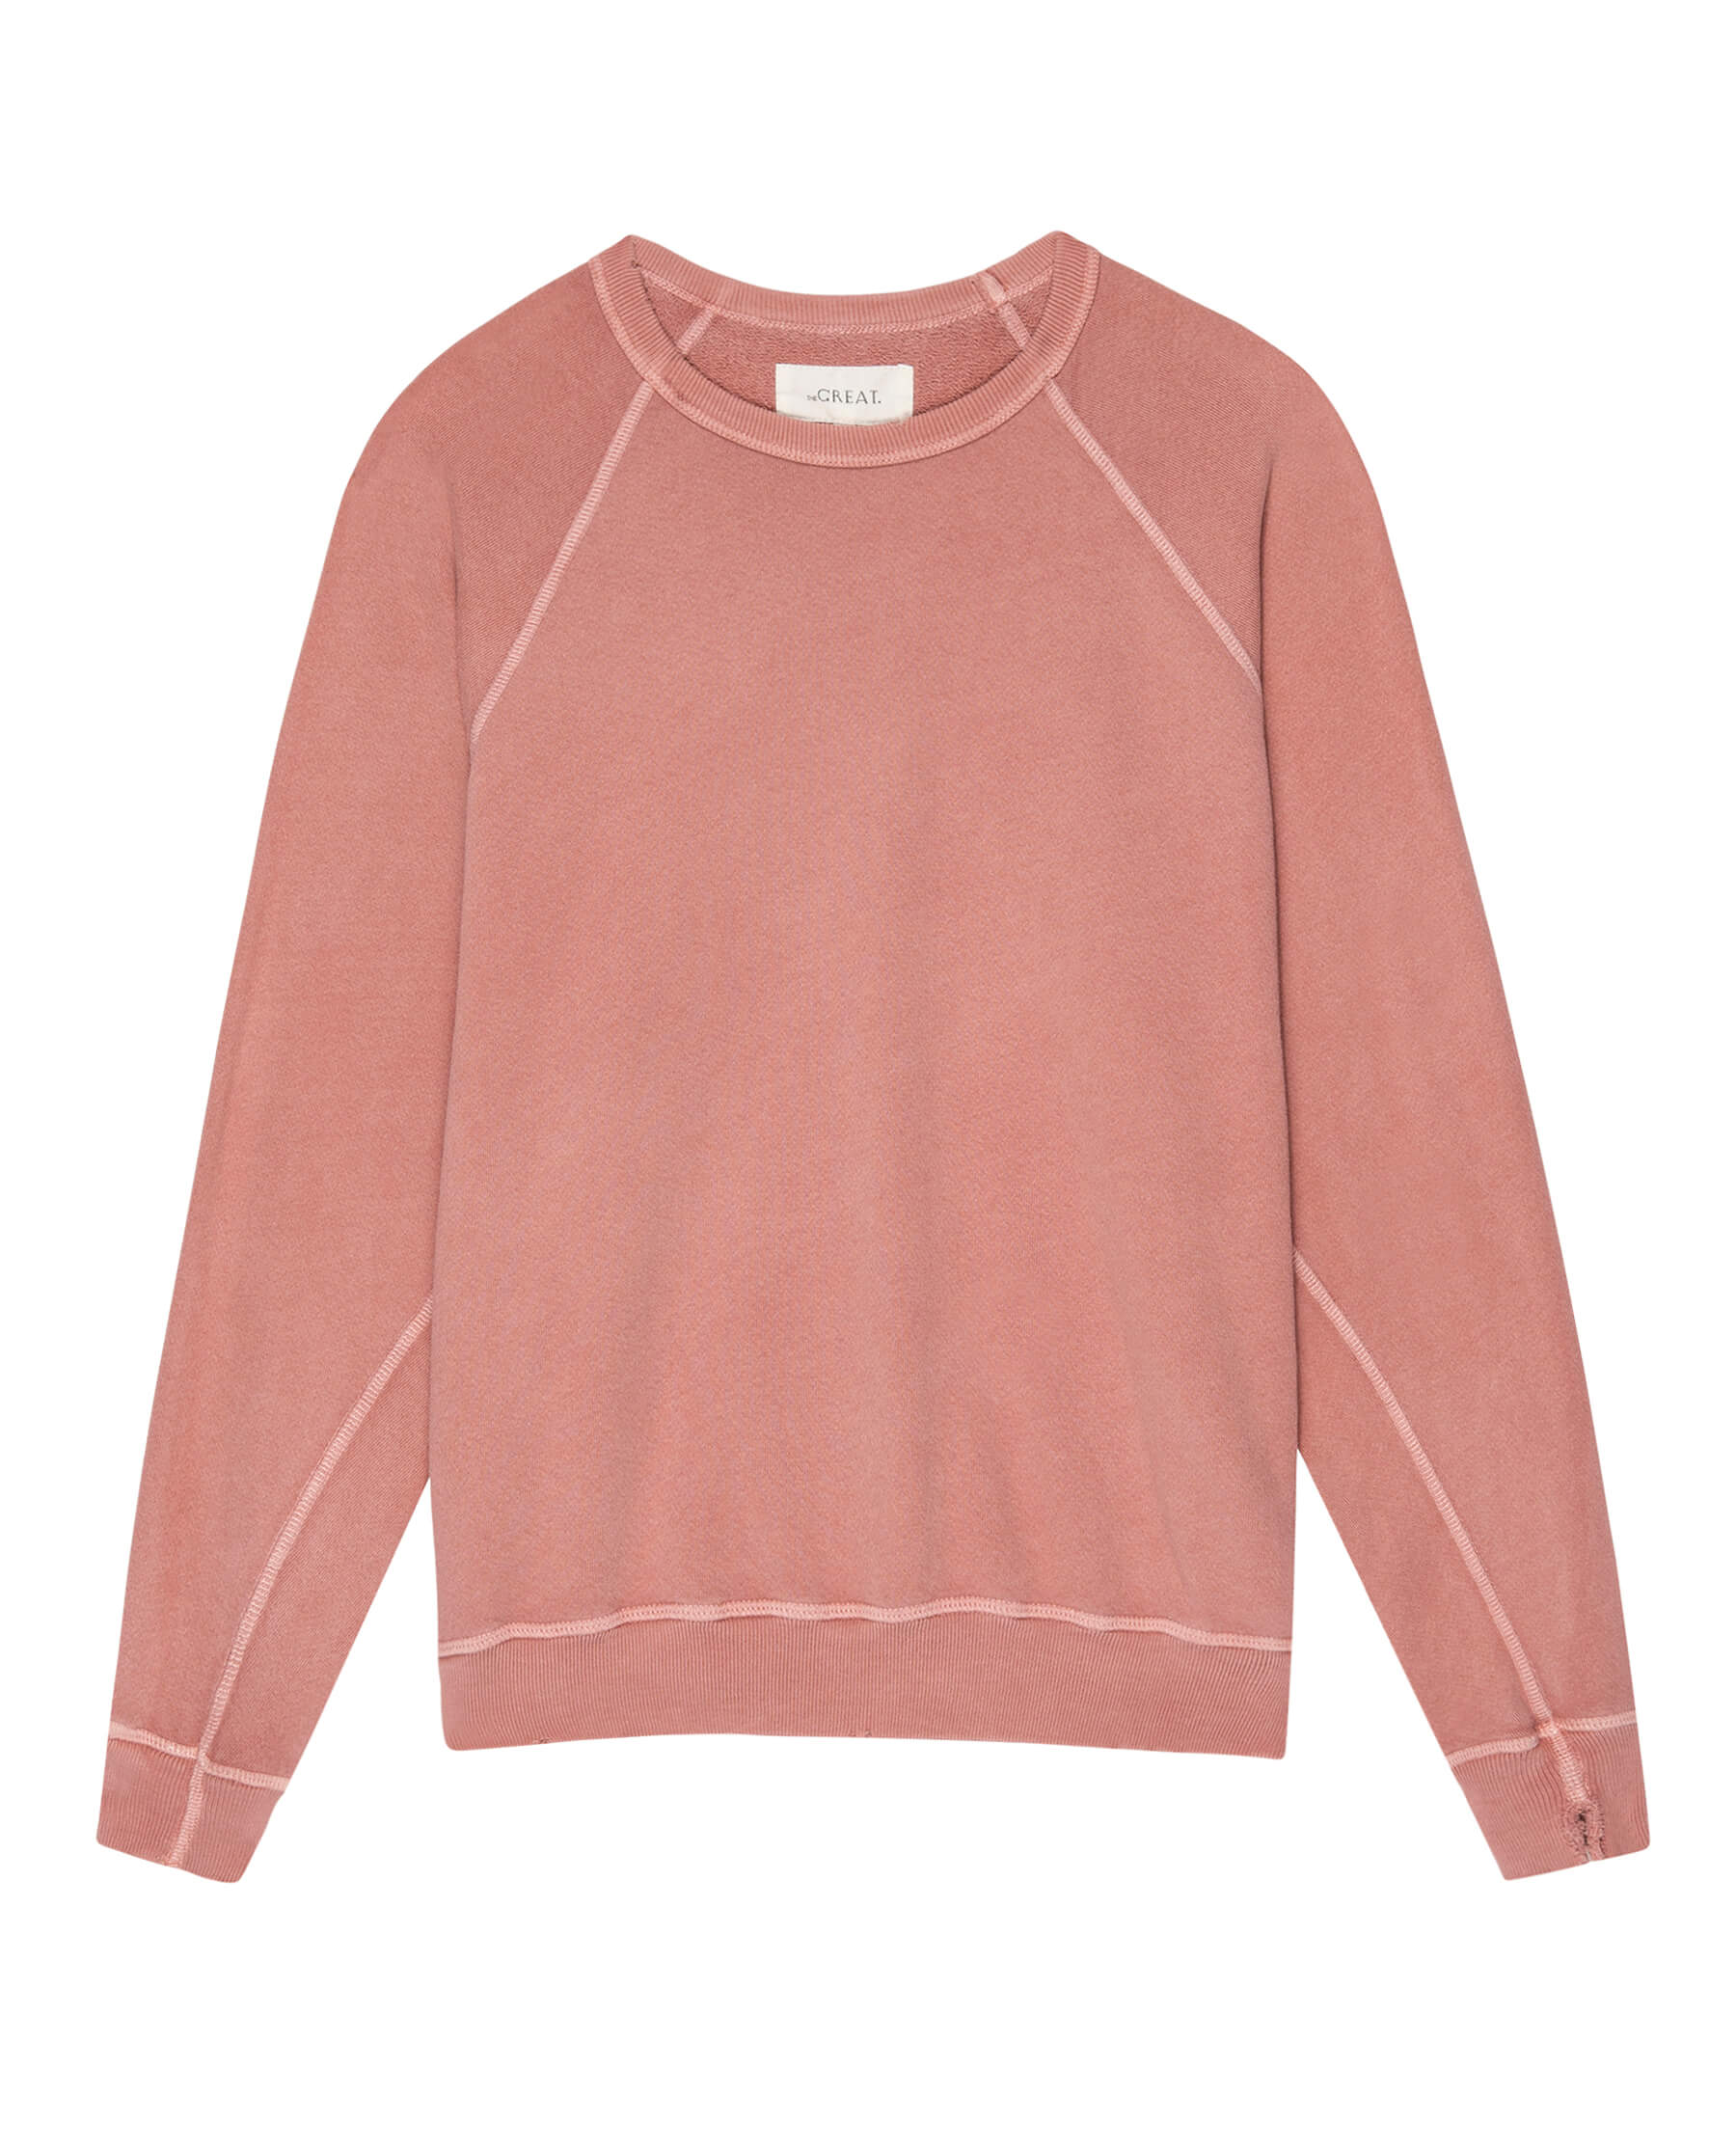 The College Sweatshirt. Solid -- Rose